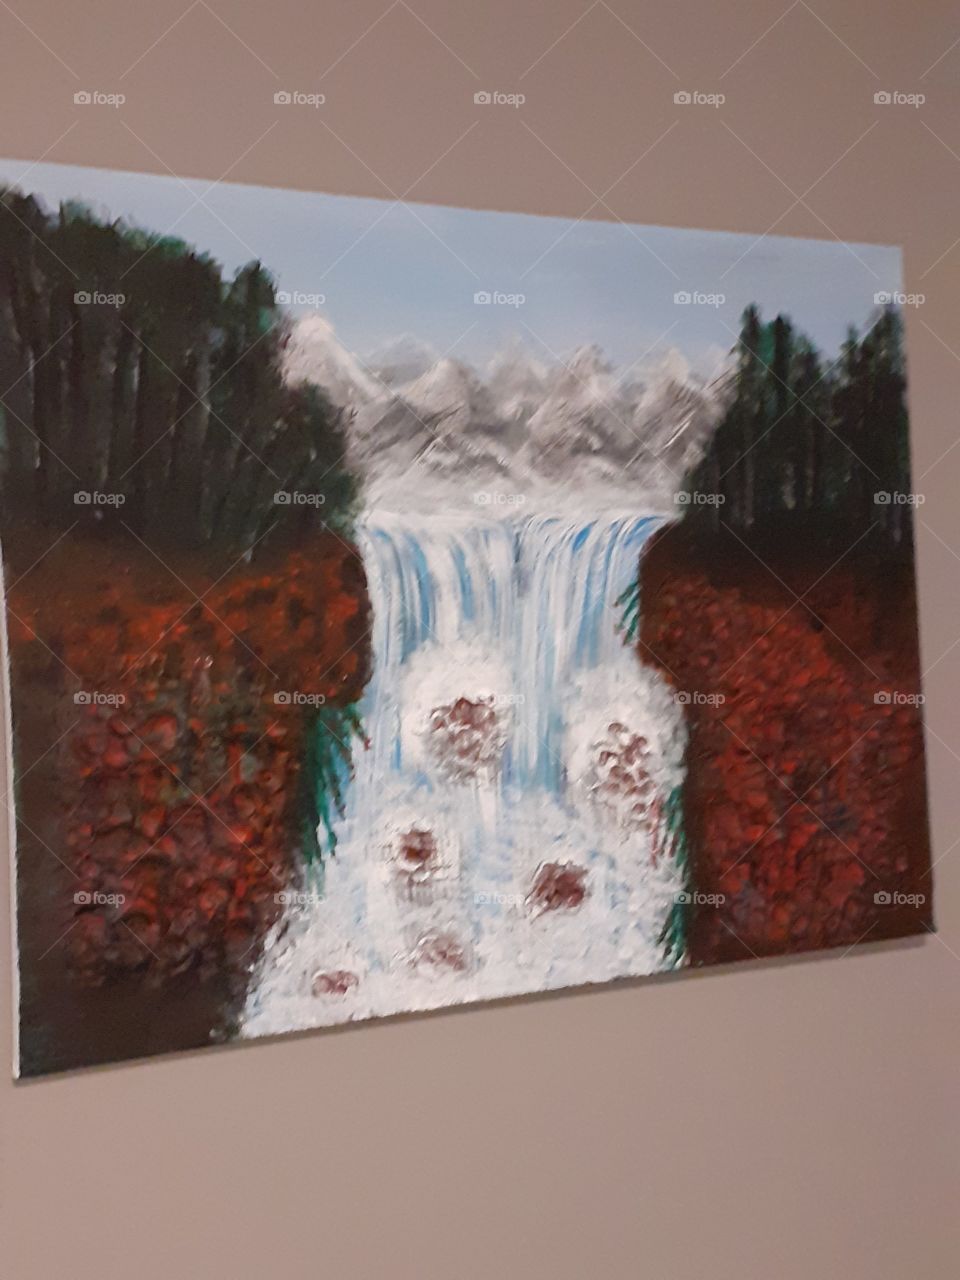 mountains waterfall rocks Clay acrylpaint on canvas